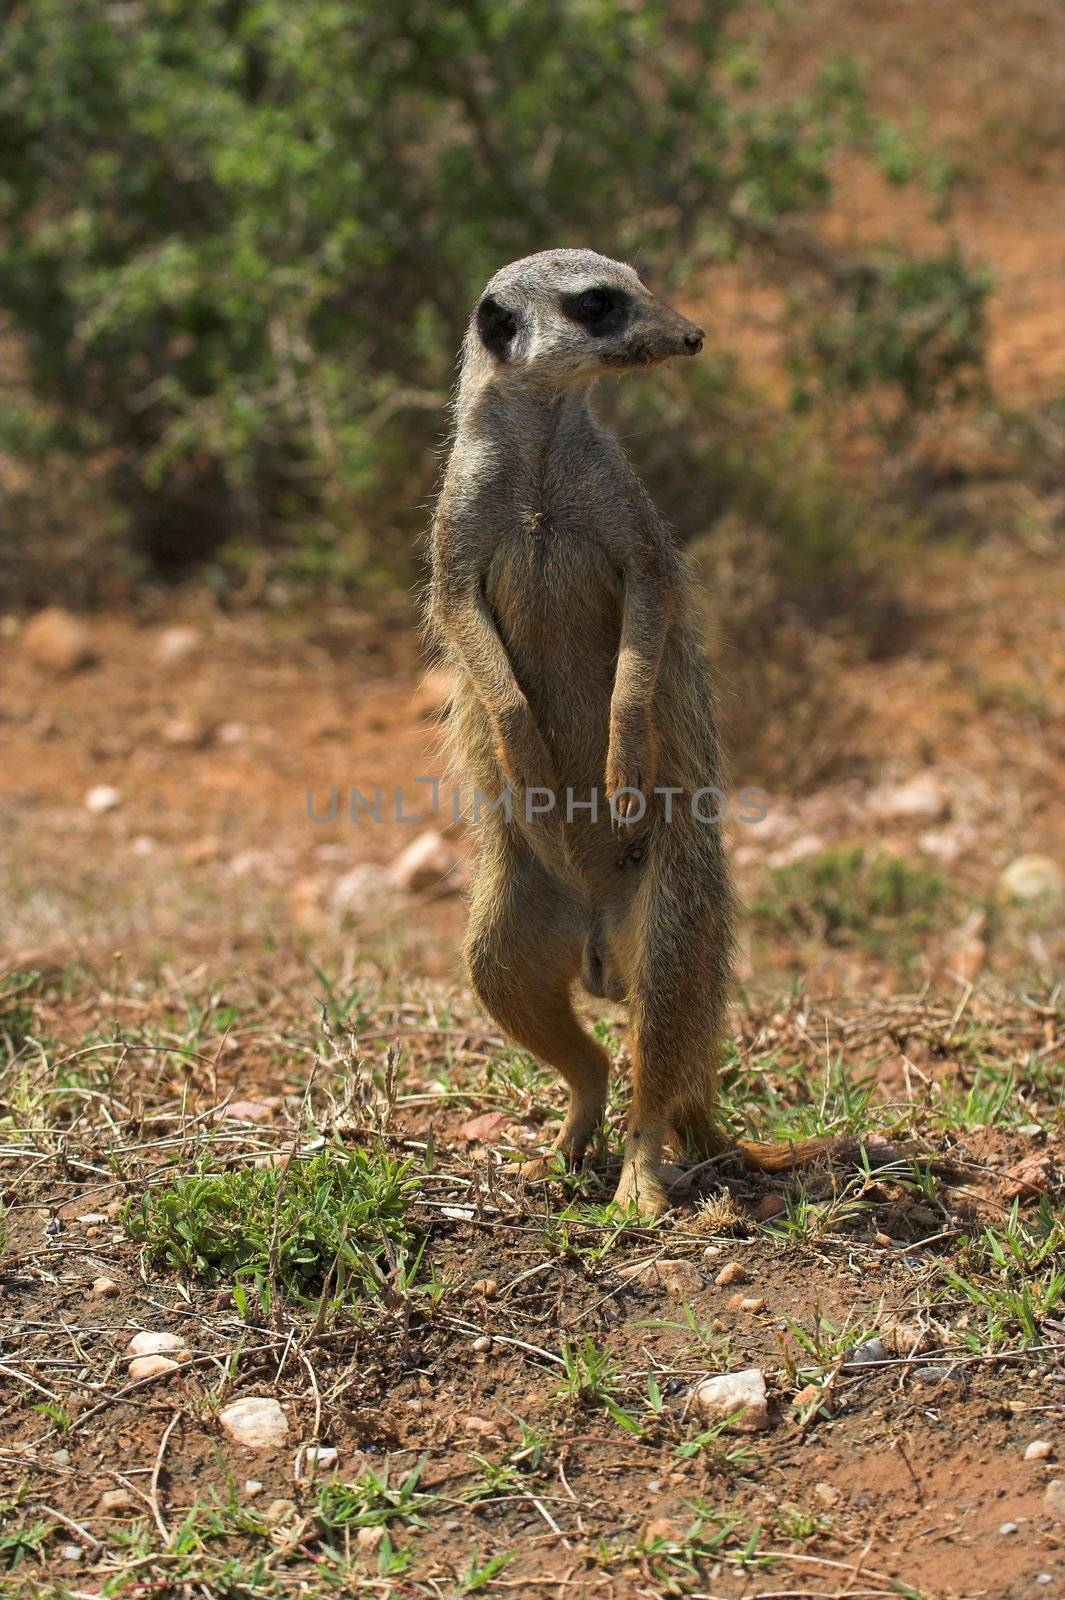 Meerkat (Suricate) standing upright scouting for danger